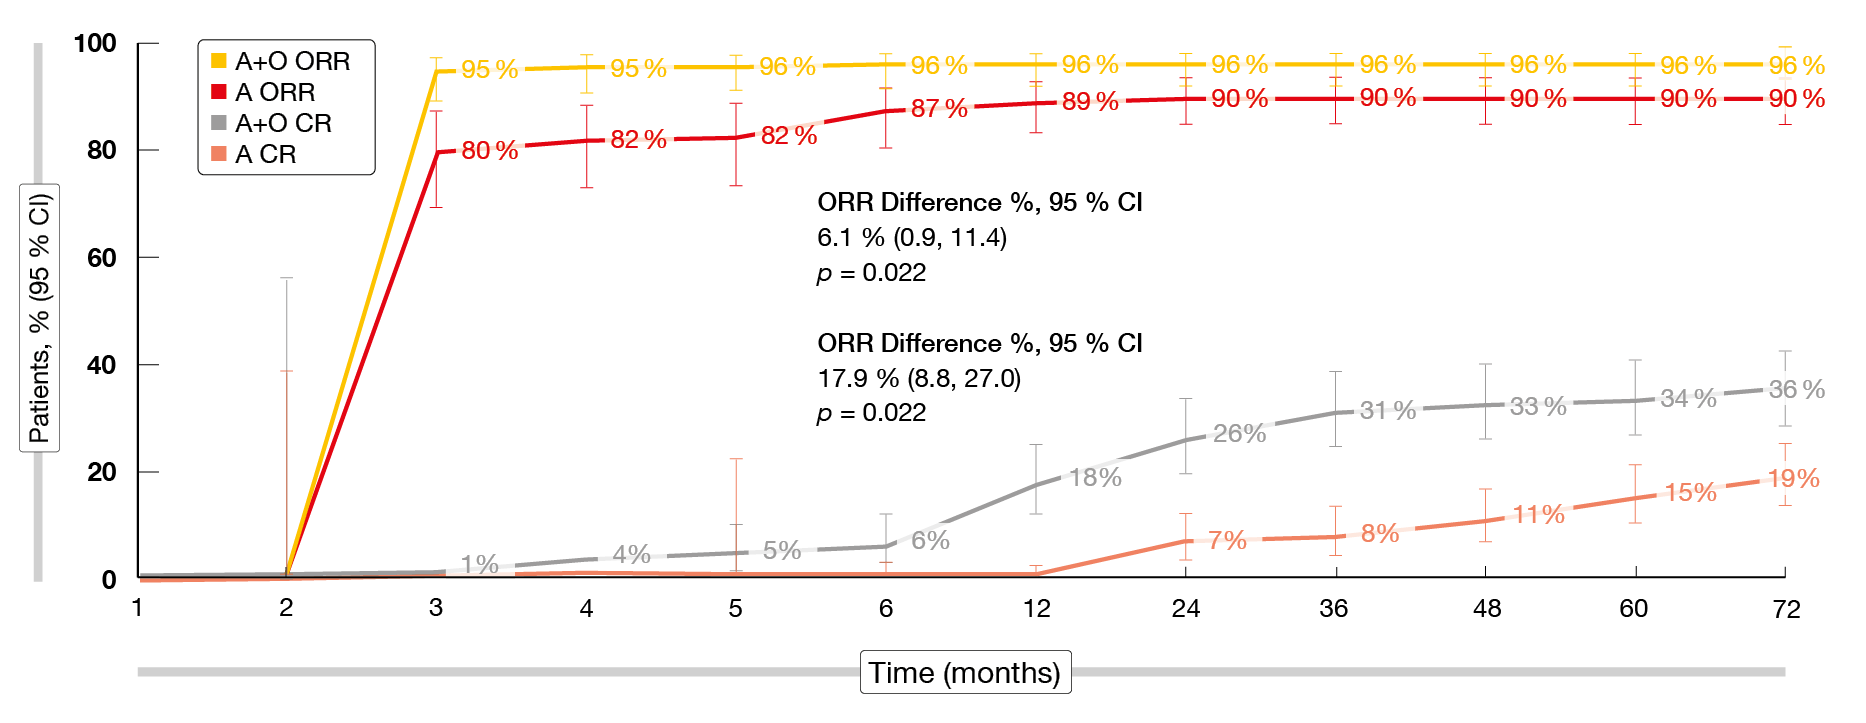 Figure 3: Overall and complete response rates with acalabrutinib/obinutuzumab vs. acalabrutinib alone over time